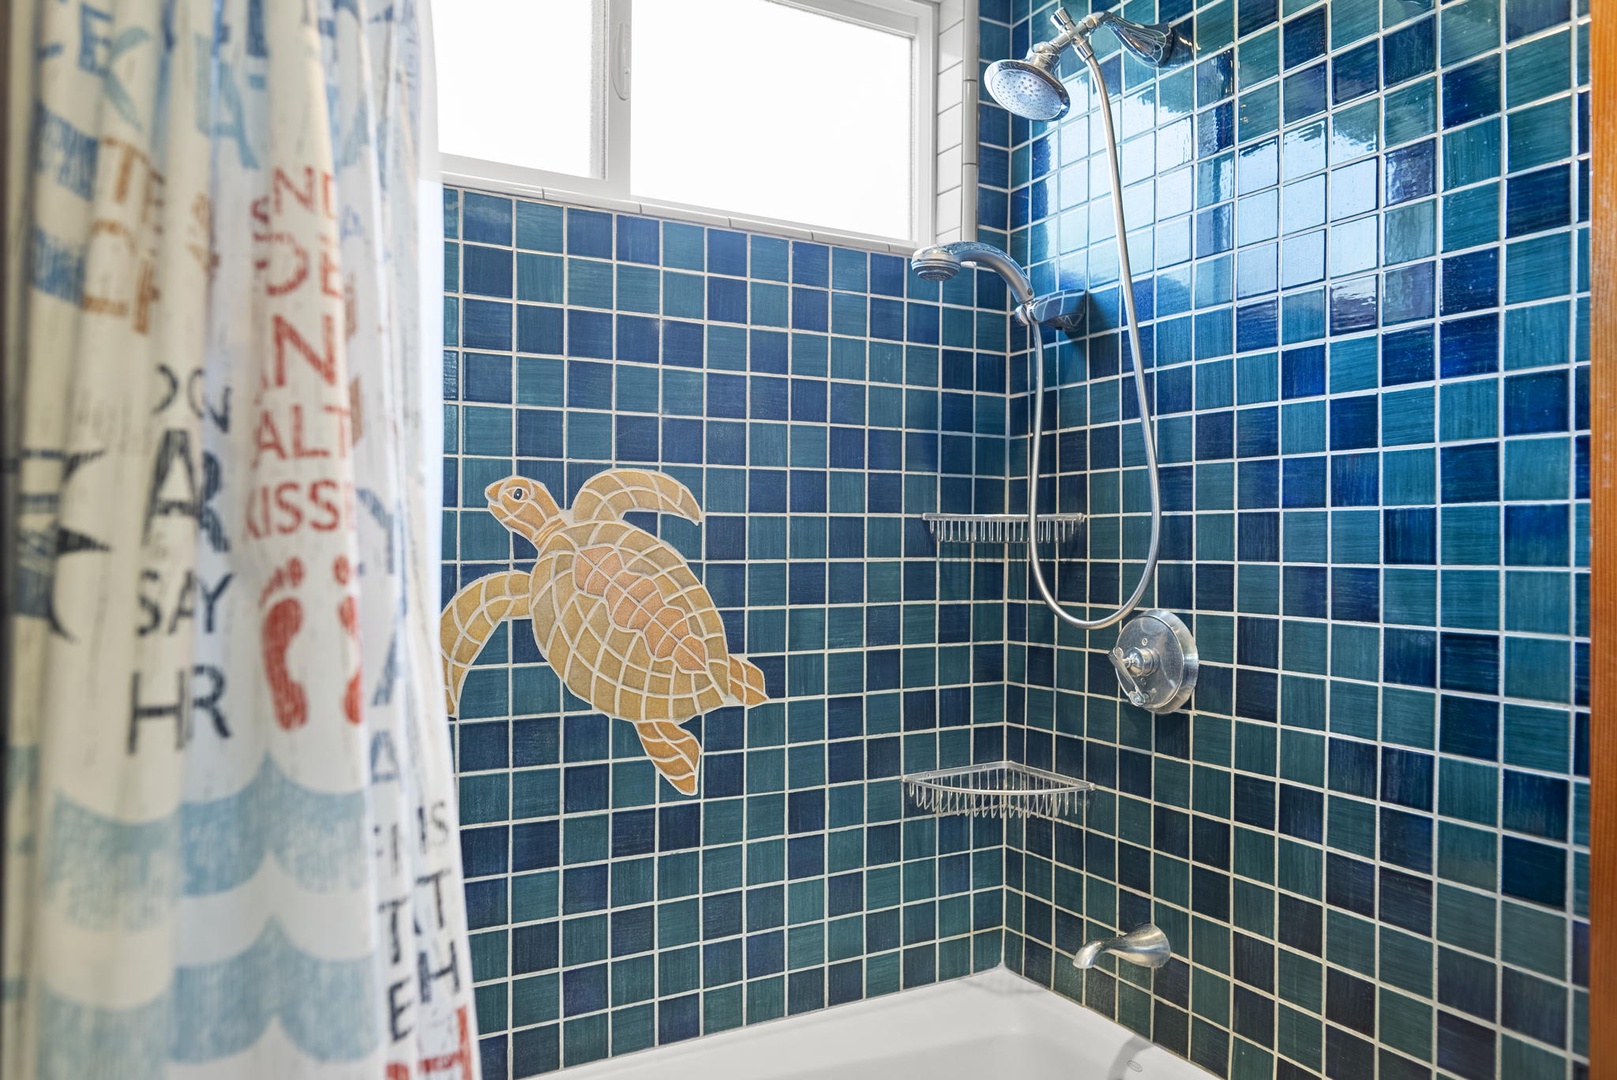 Waialua Vacation Rentals, Hale Oka Nunu - Shower/tub combo with oceanic tile details